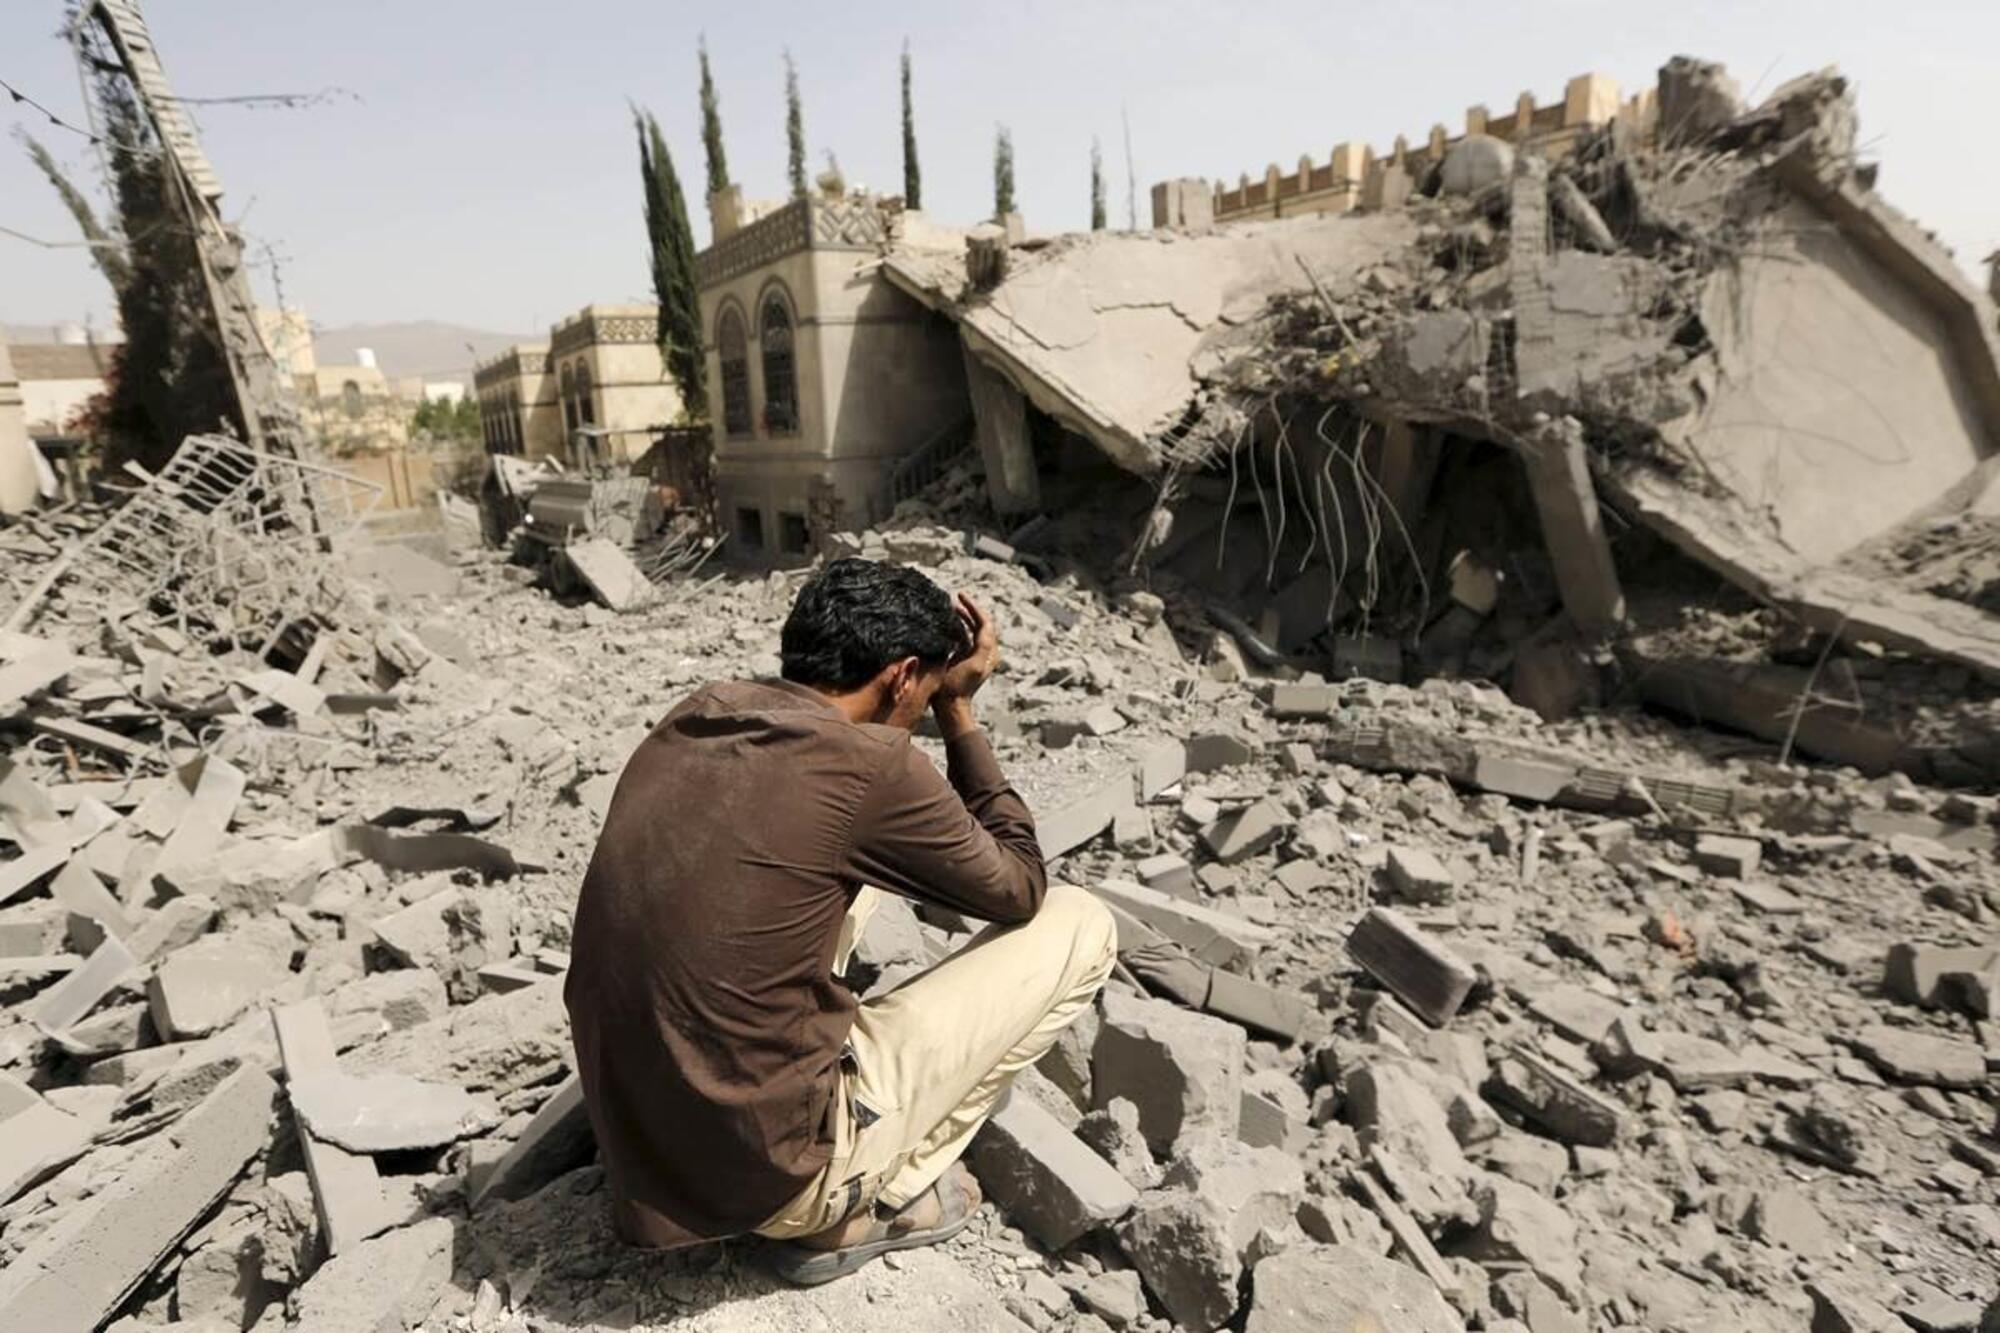 Le devastanti conseguenze della guerra in Yemen